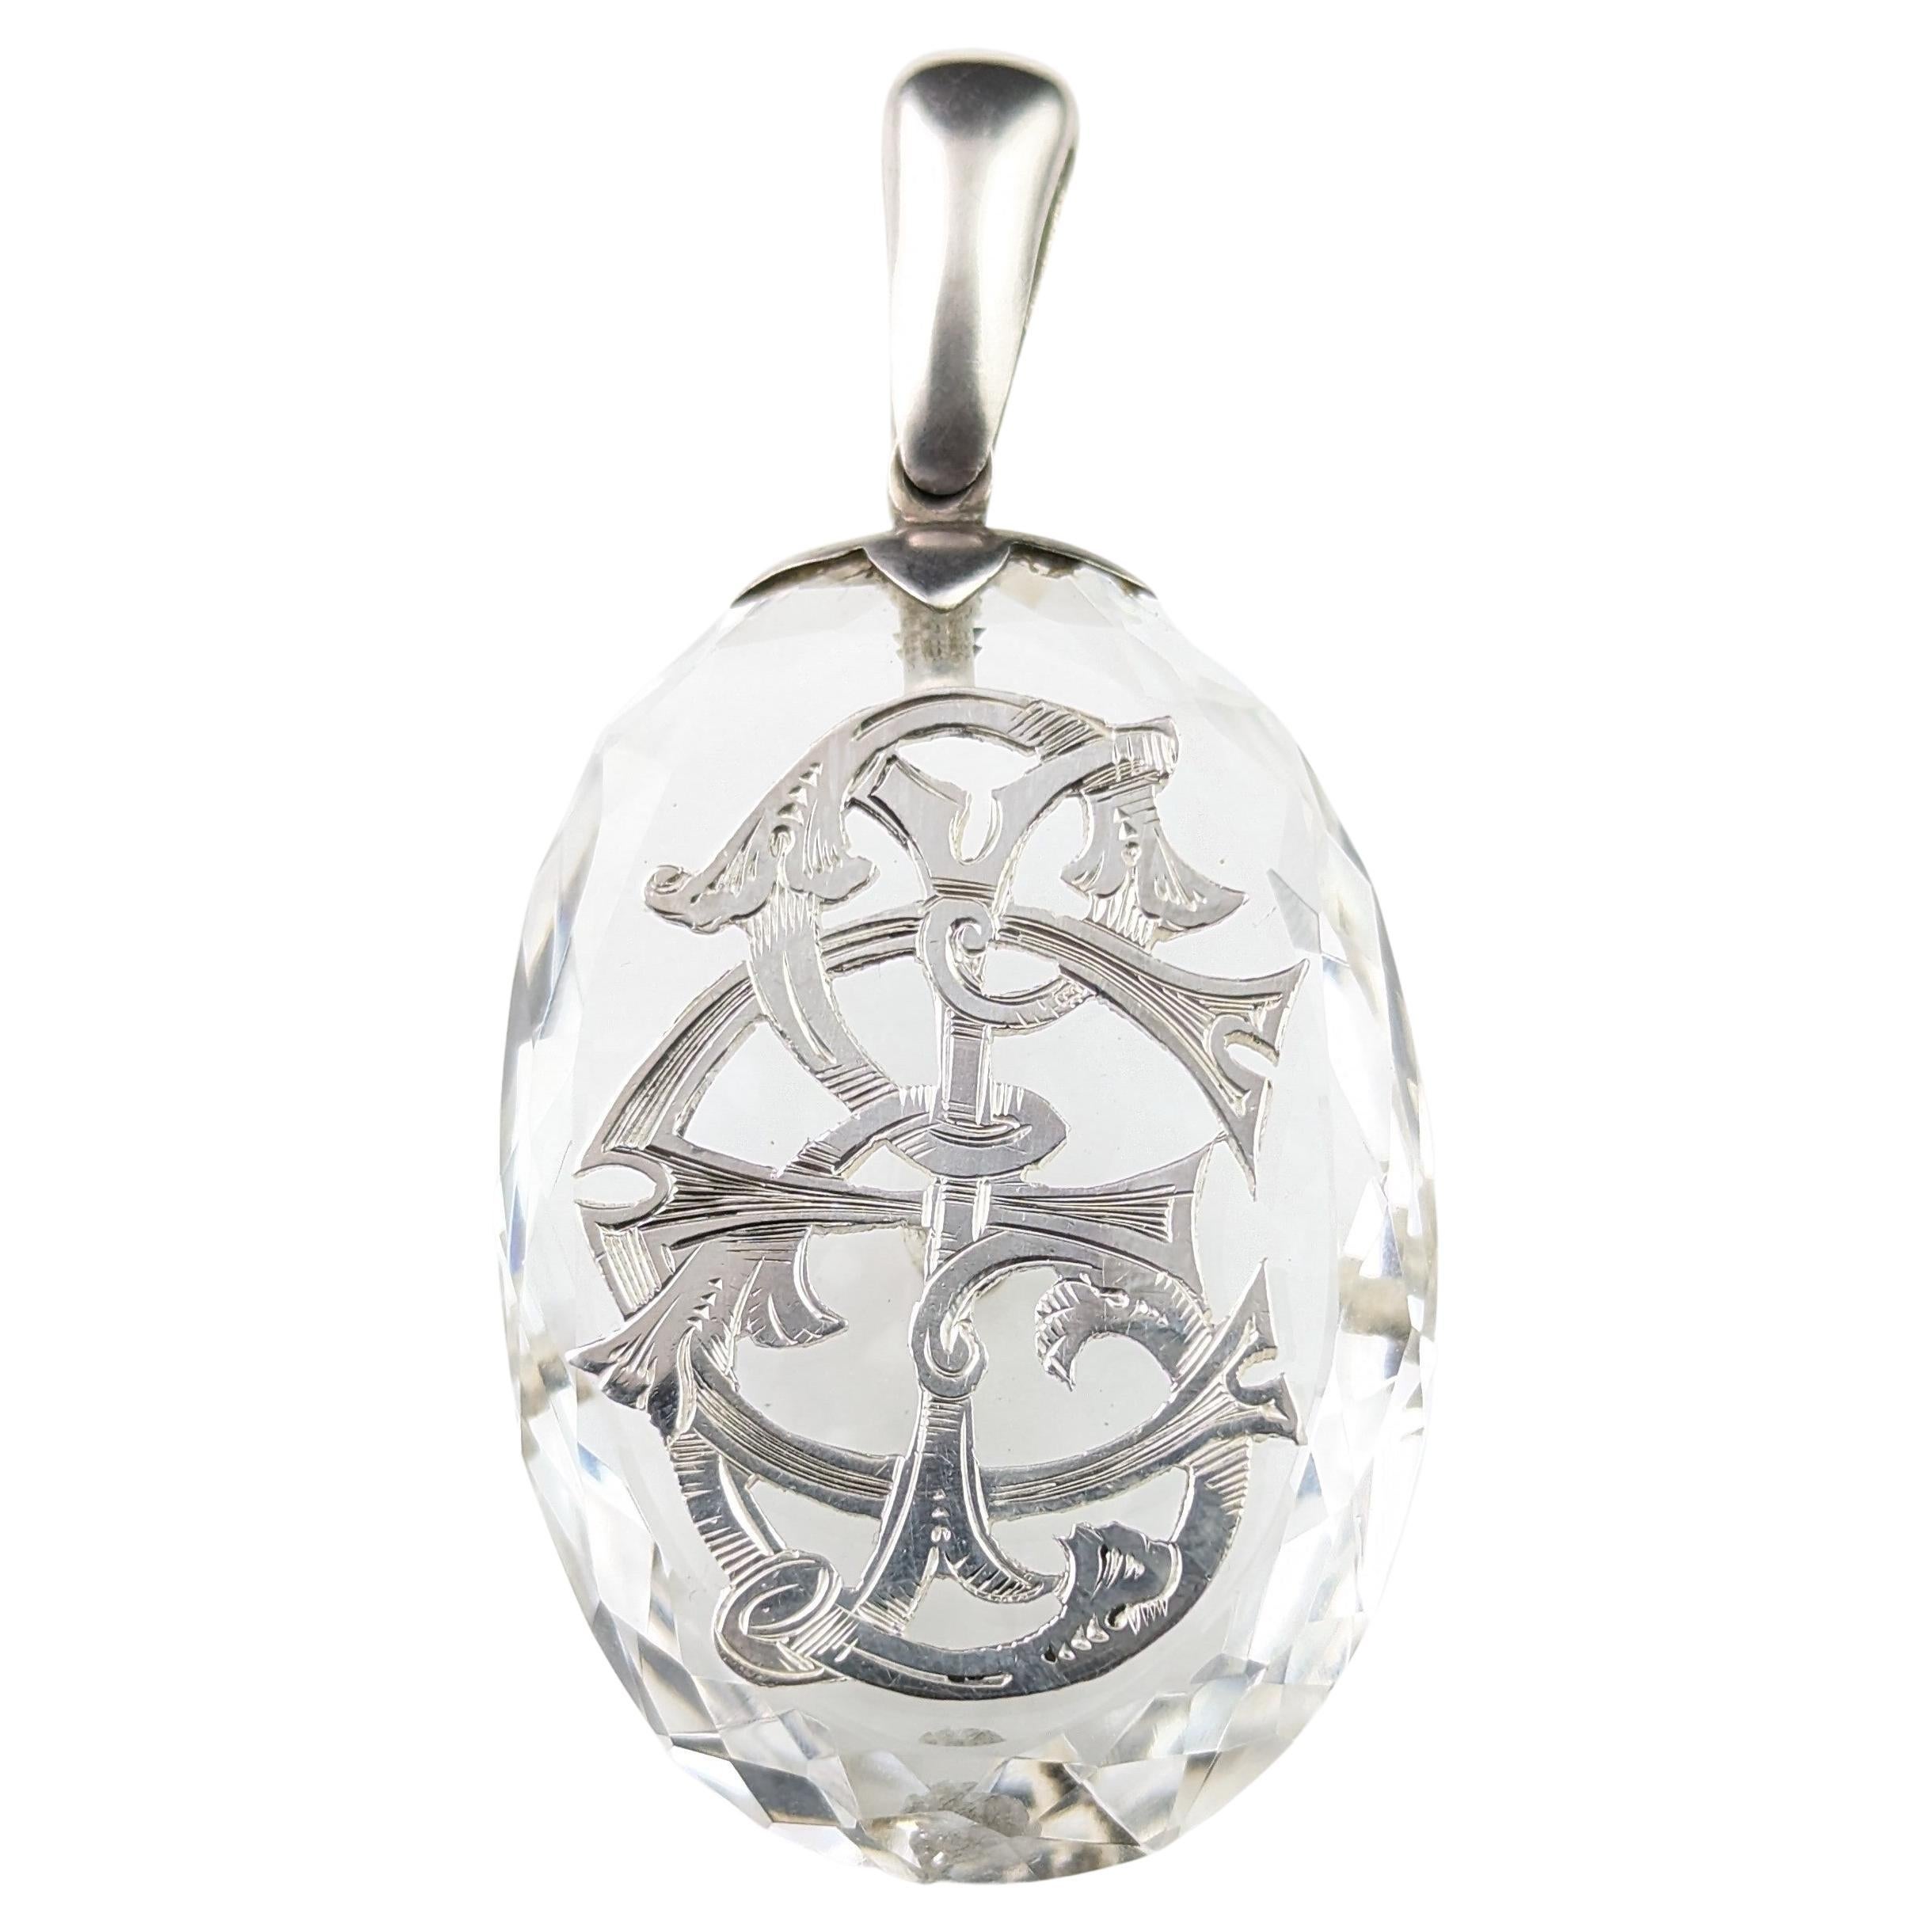 Antique Rock Crystal monogram pendant, sterling silver, Victorian